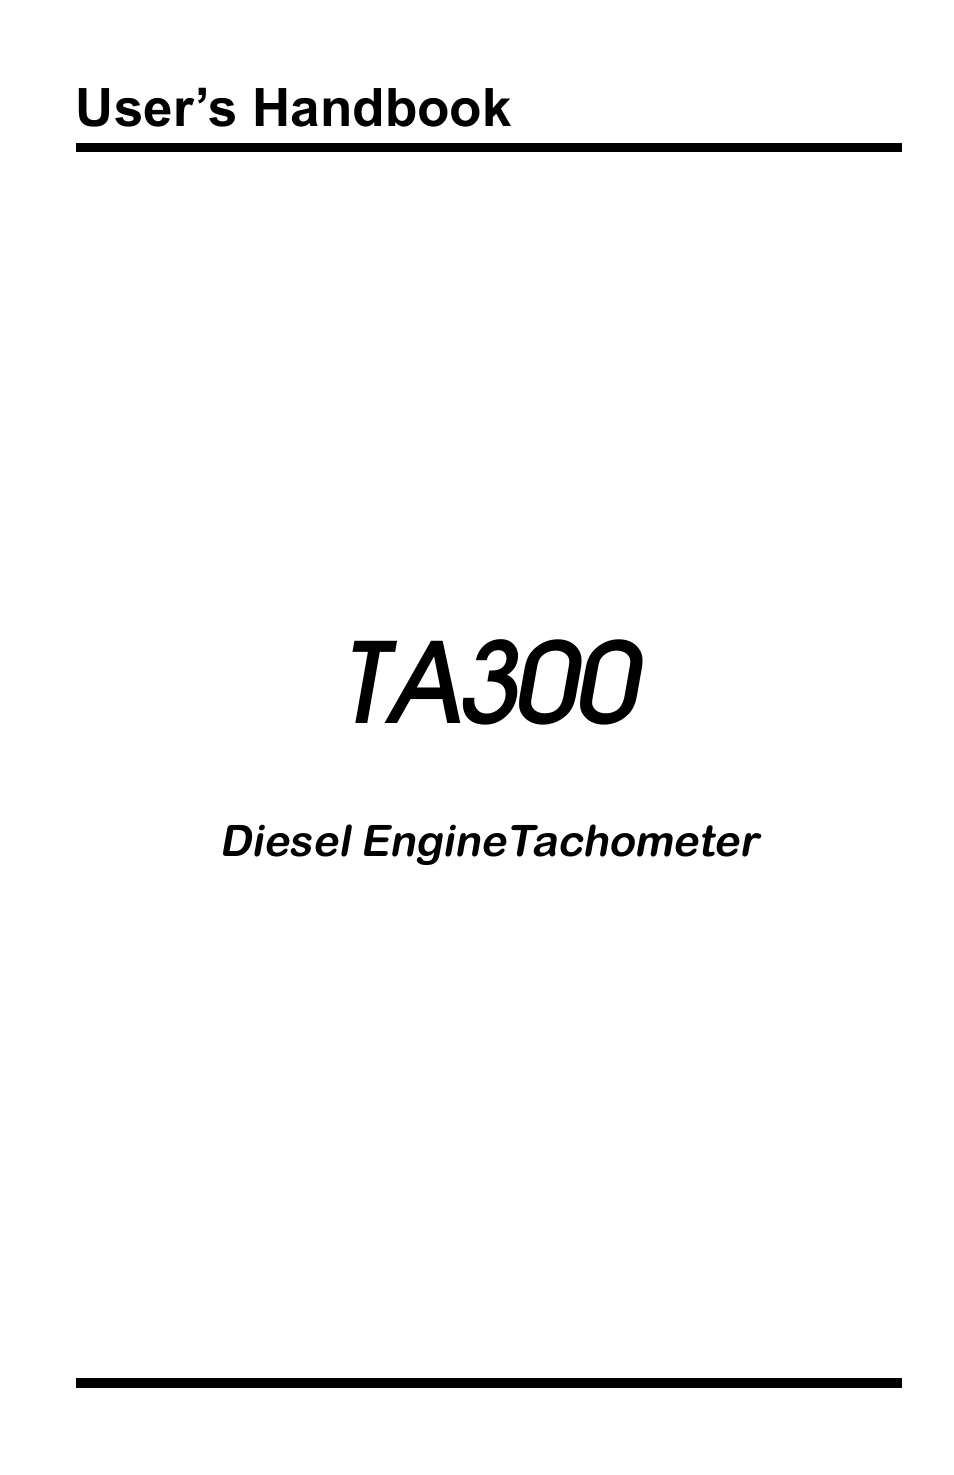 TA300 SmarTach D : Digital Diesel Engine Tachometer